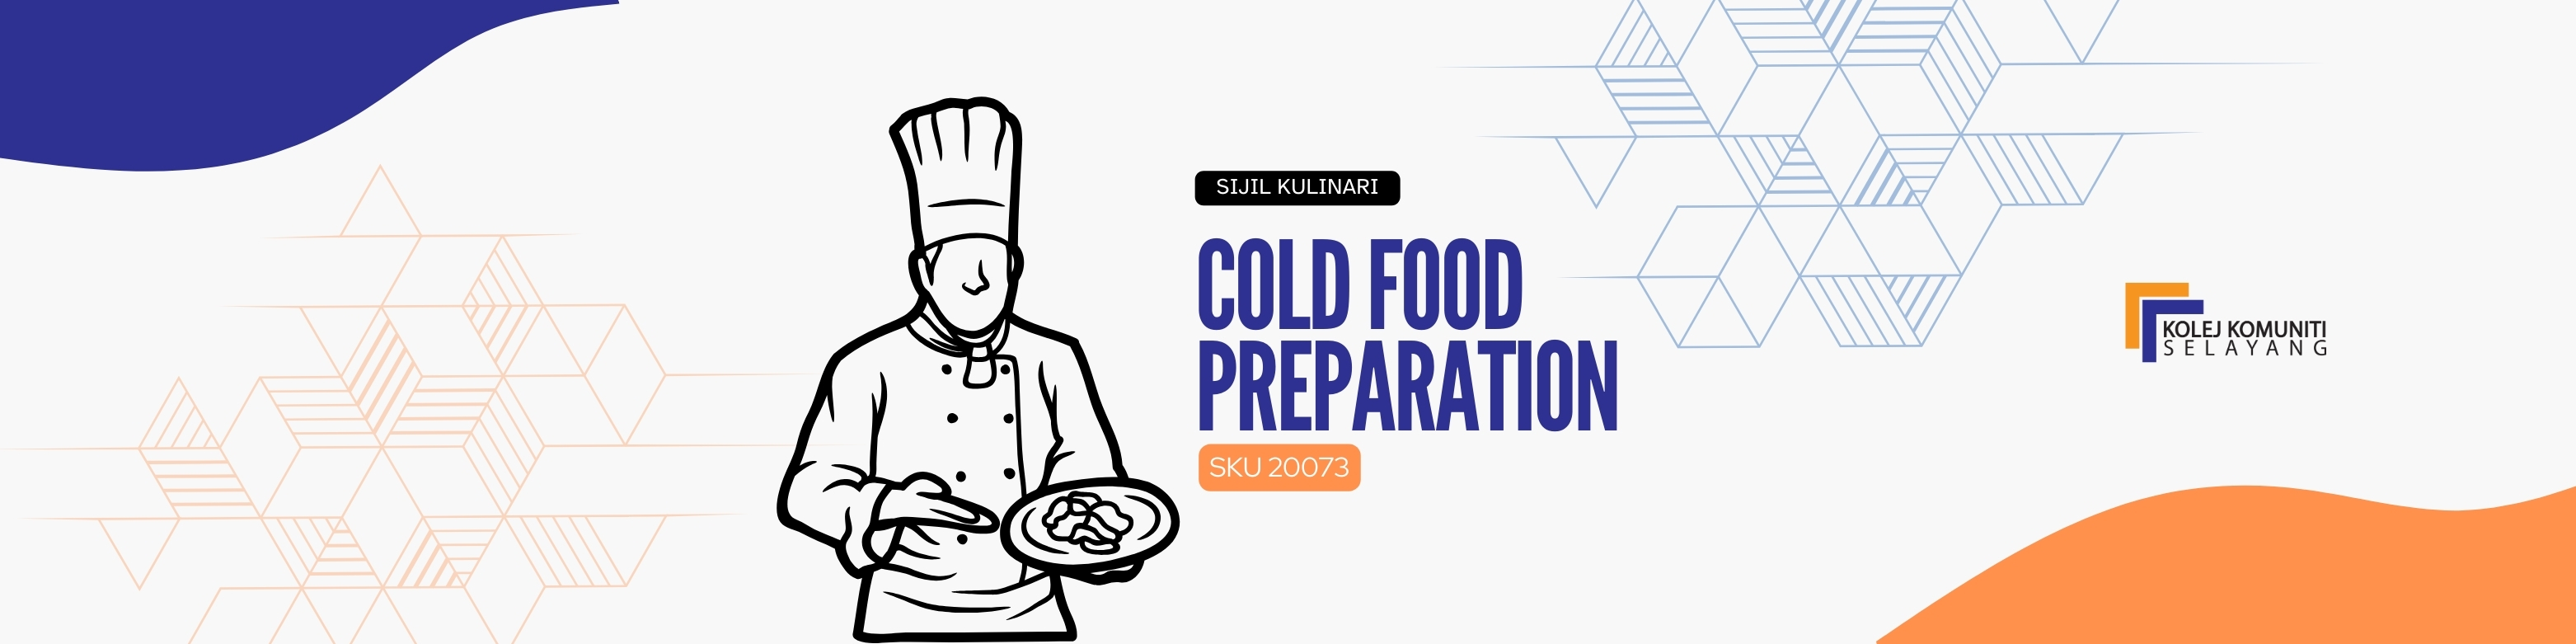 SKU20073 - COLD FOOD PREPARATION